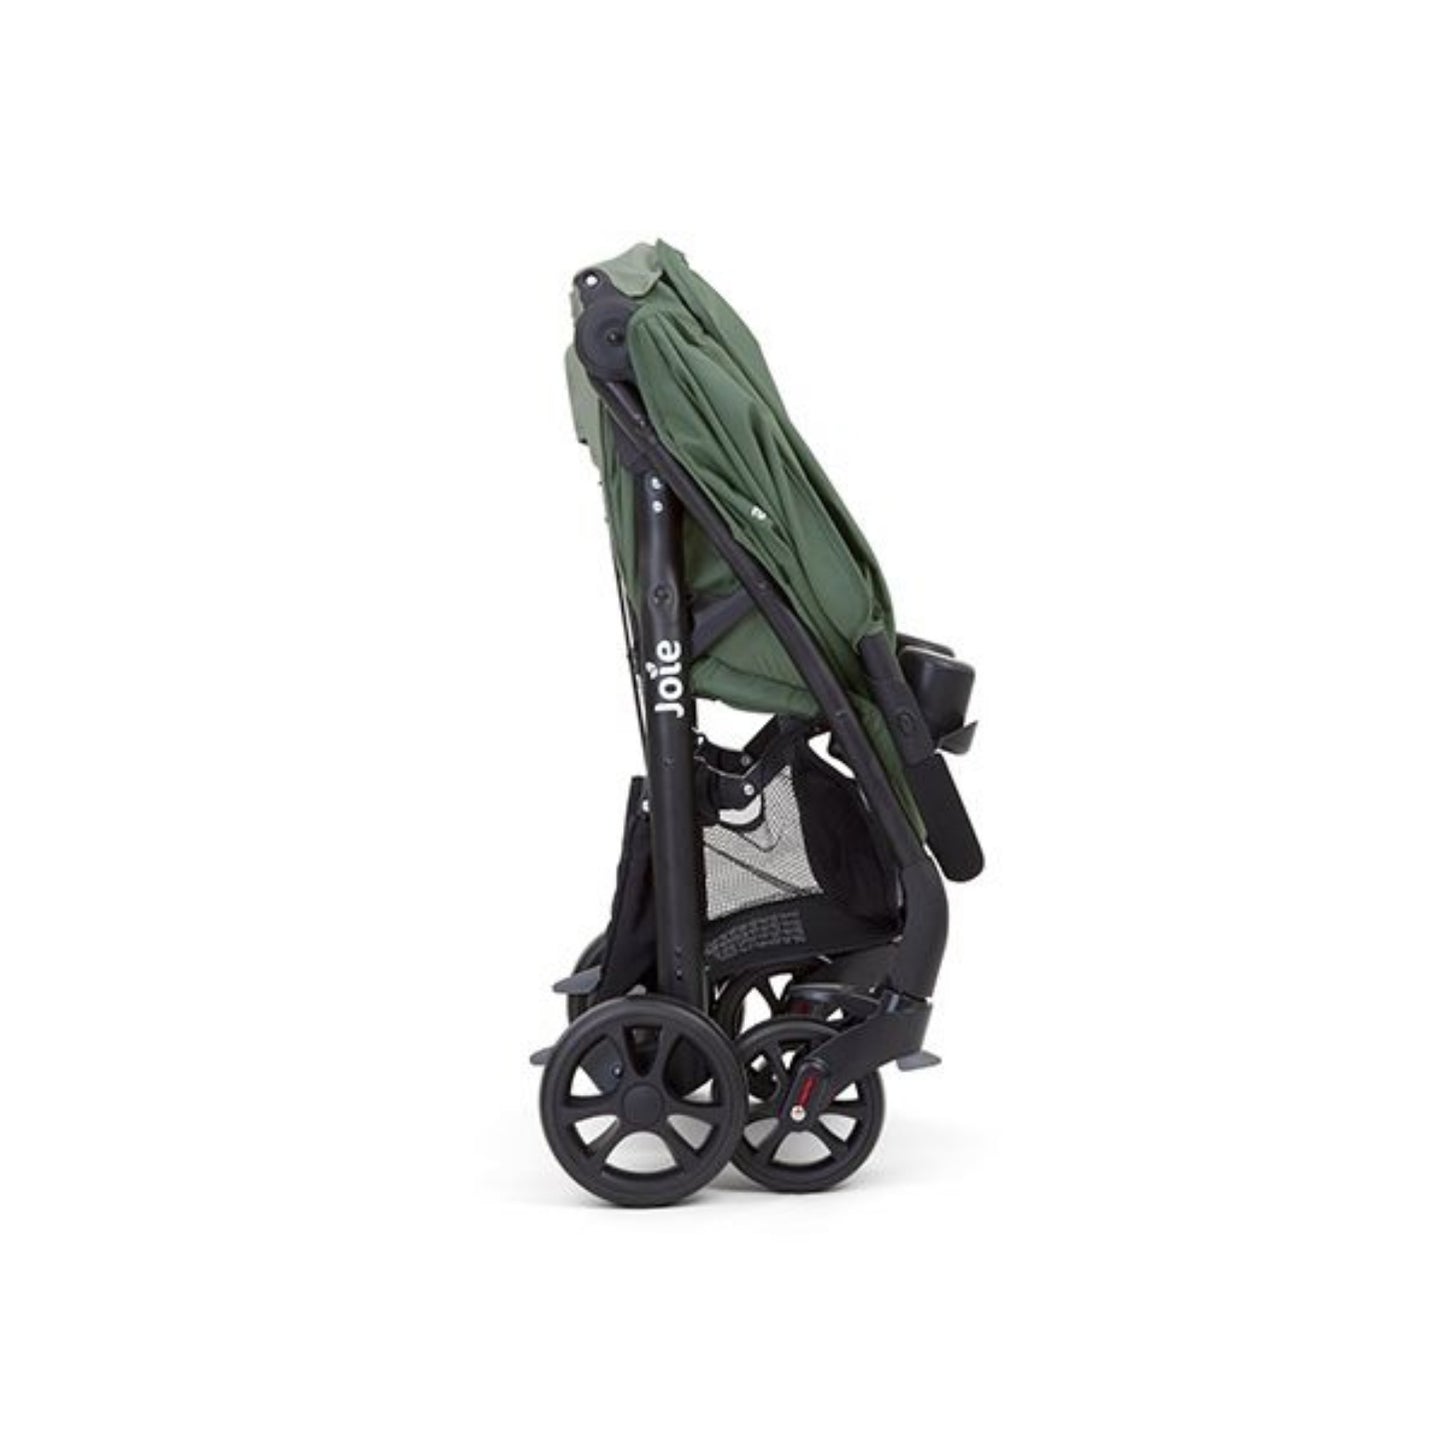 Joie Muze travel system baby Stroller for babies with car seat عربة اطفال ميوز ترافيل سيستم من جوي للاطفال